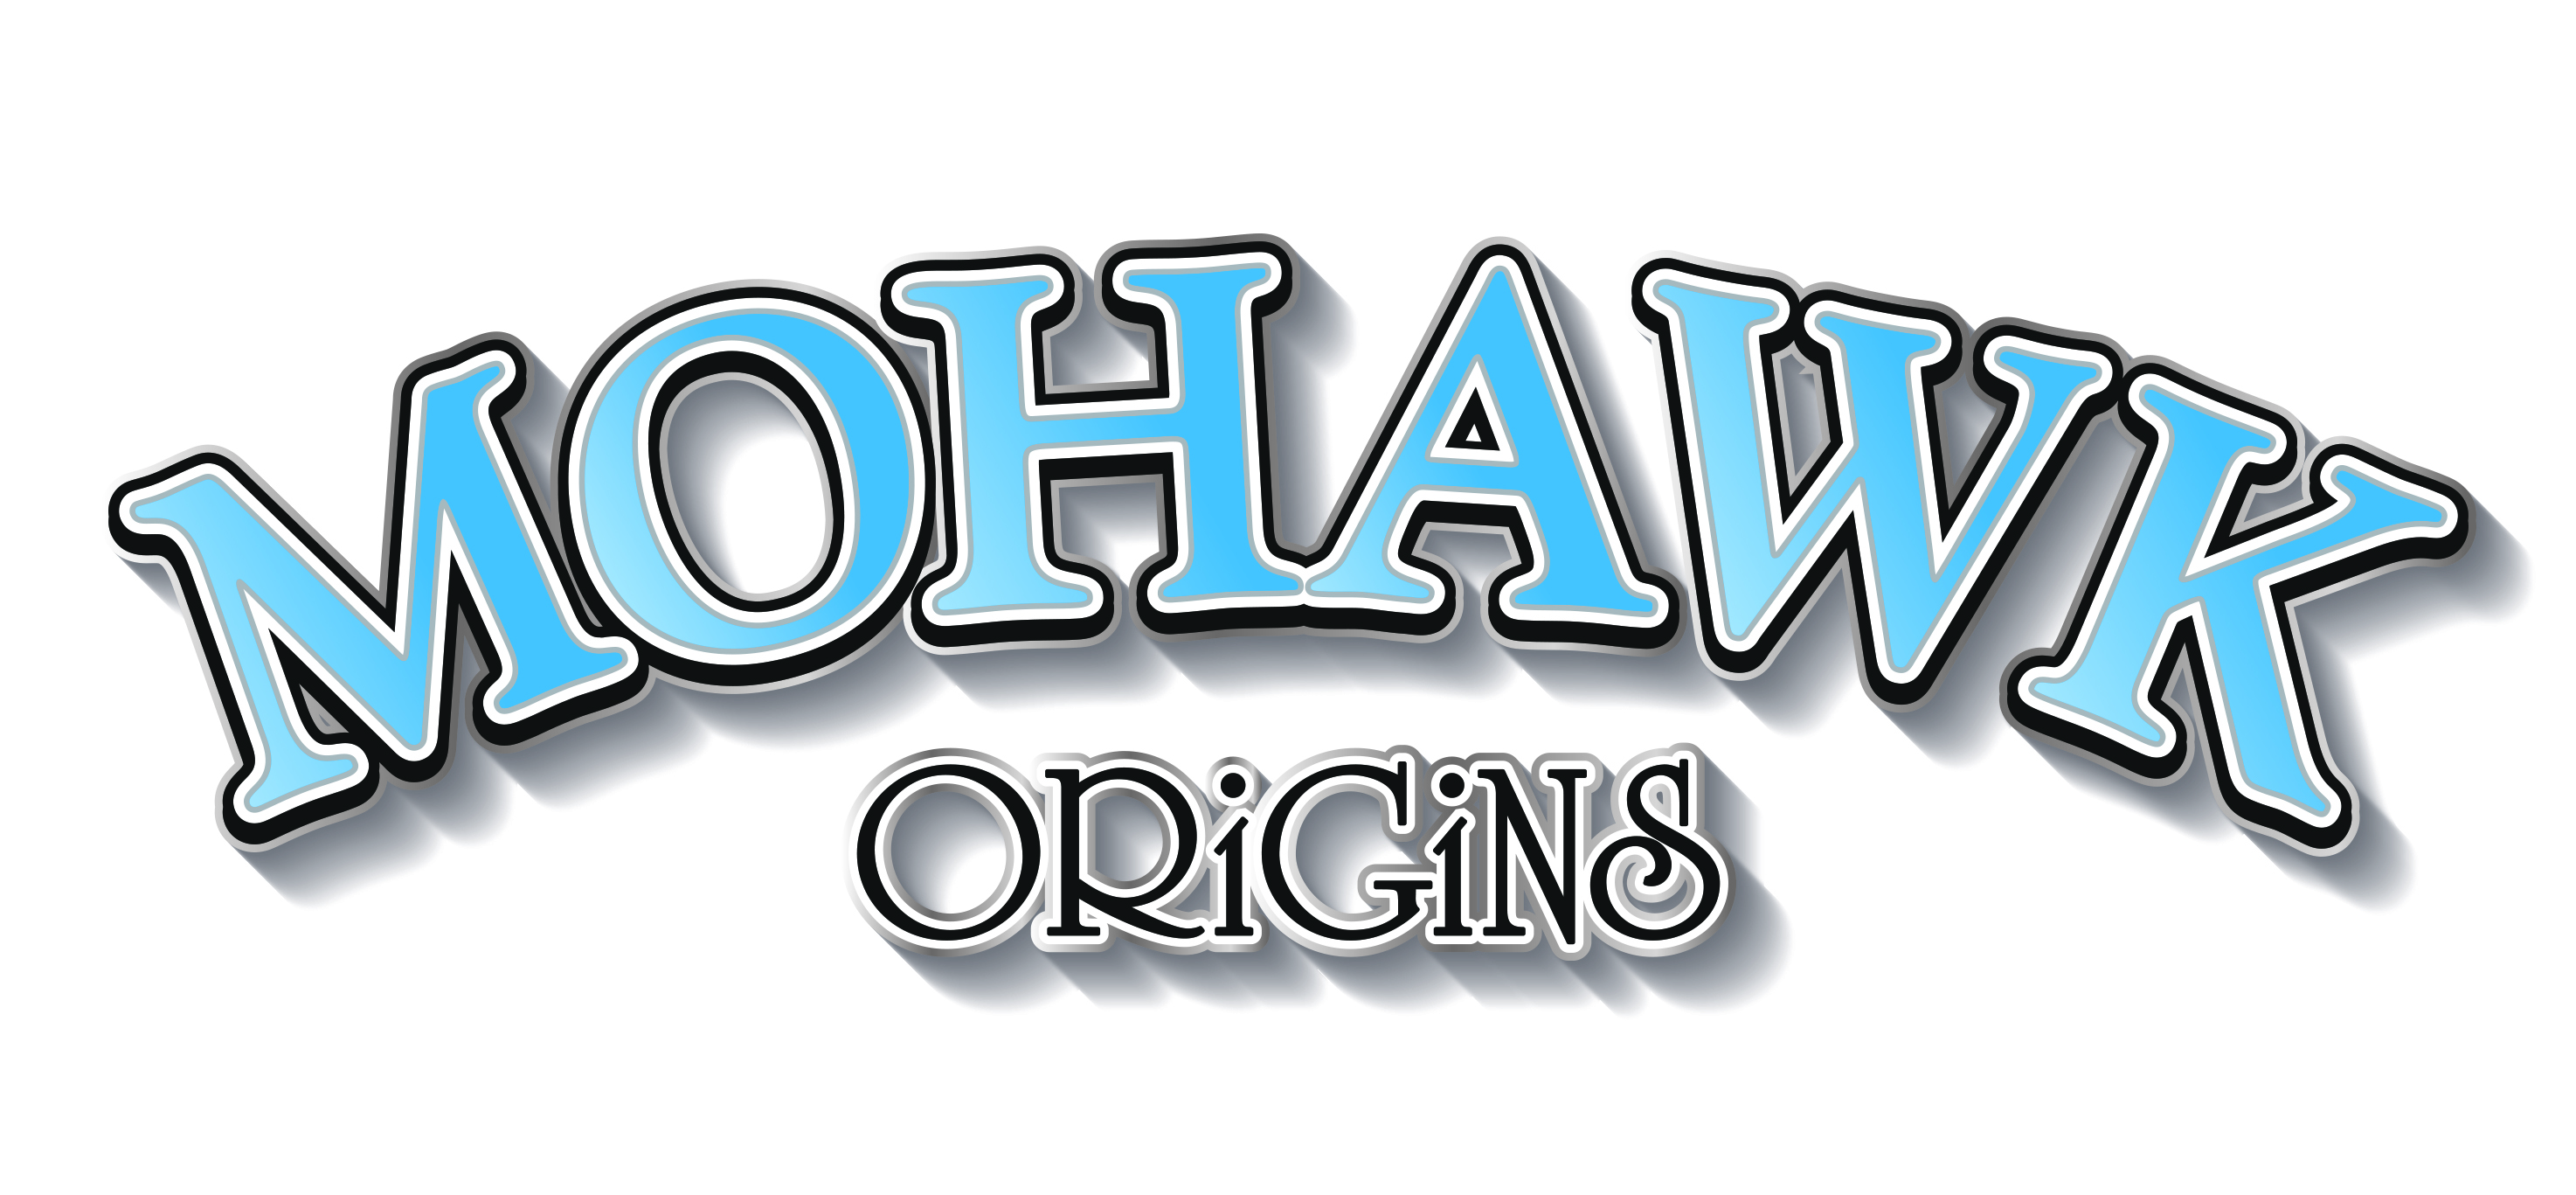 MOHAWK_Origins_Logo_300dpi_CMYK